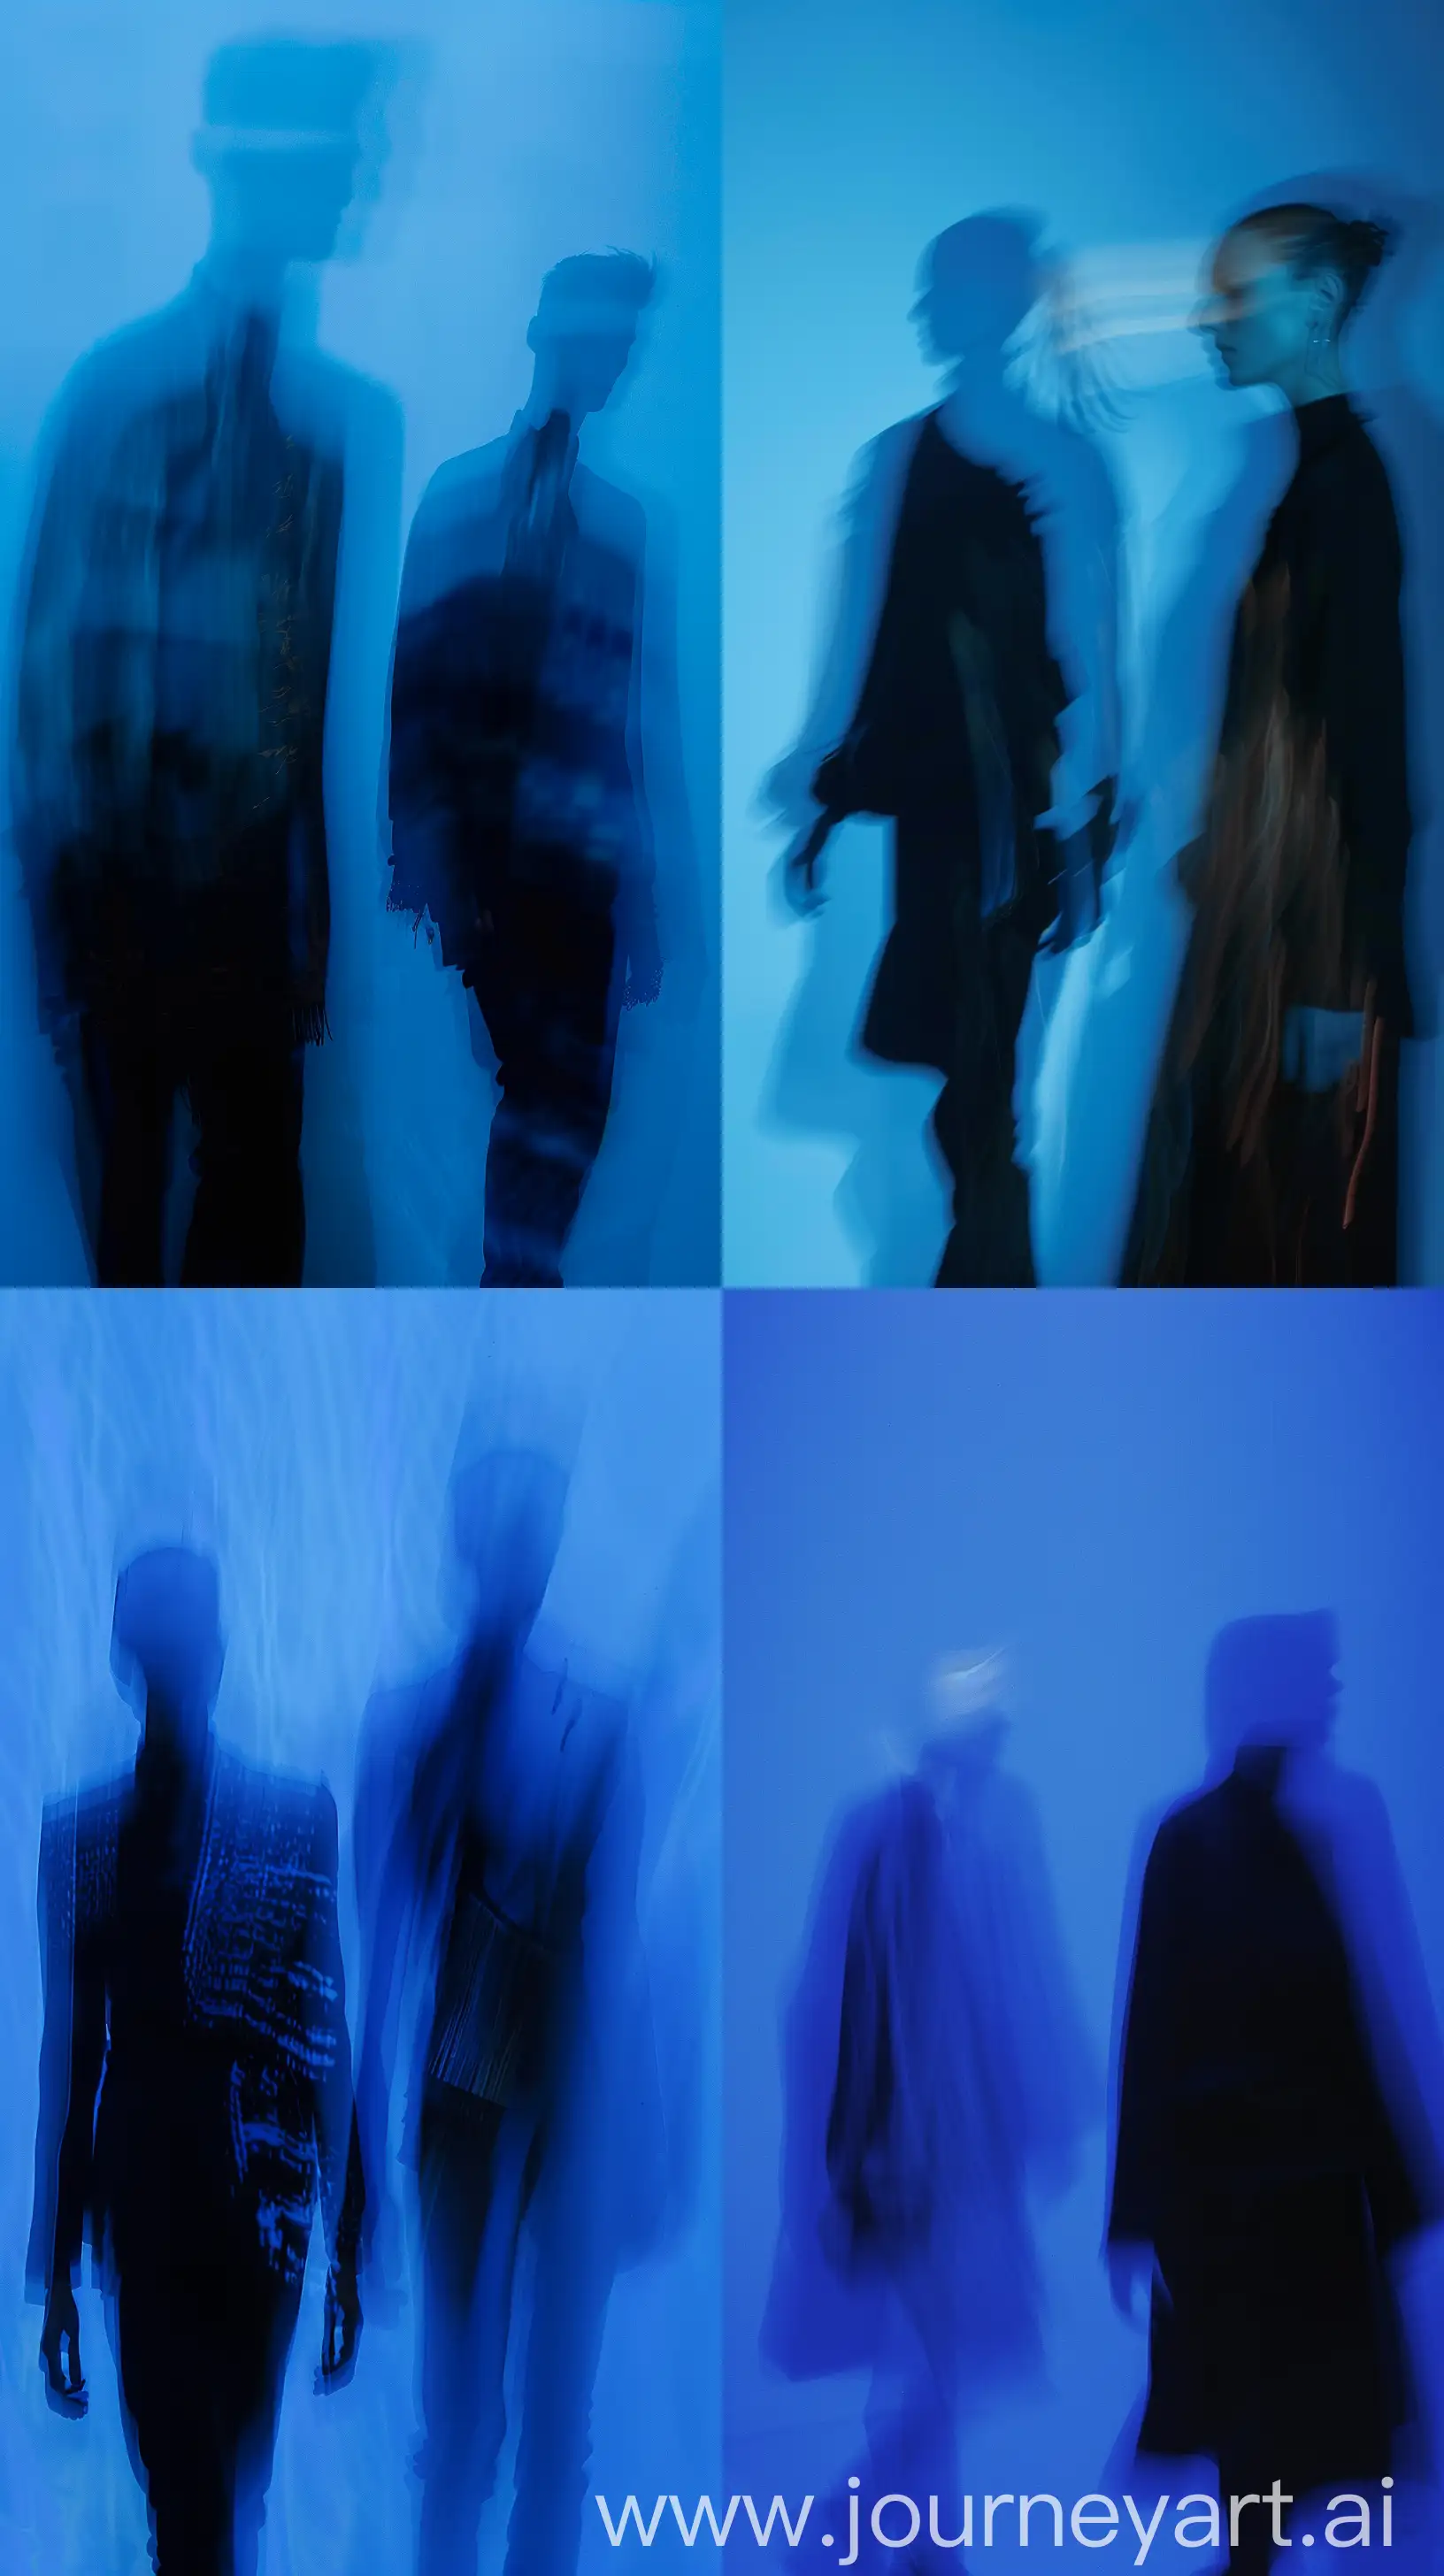 Ethereal-Balenciaga-Fashion-Models-in-Haunting-Blur-Against-Blue-Background